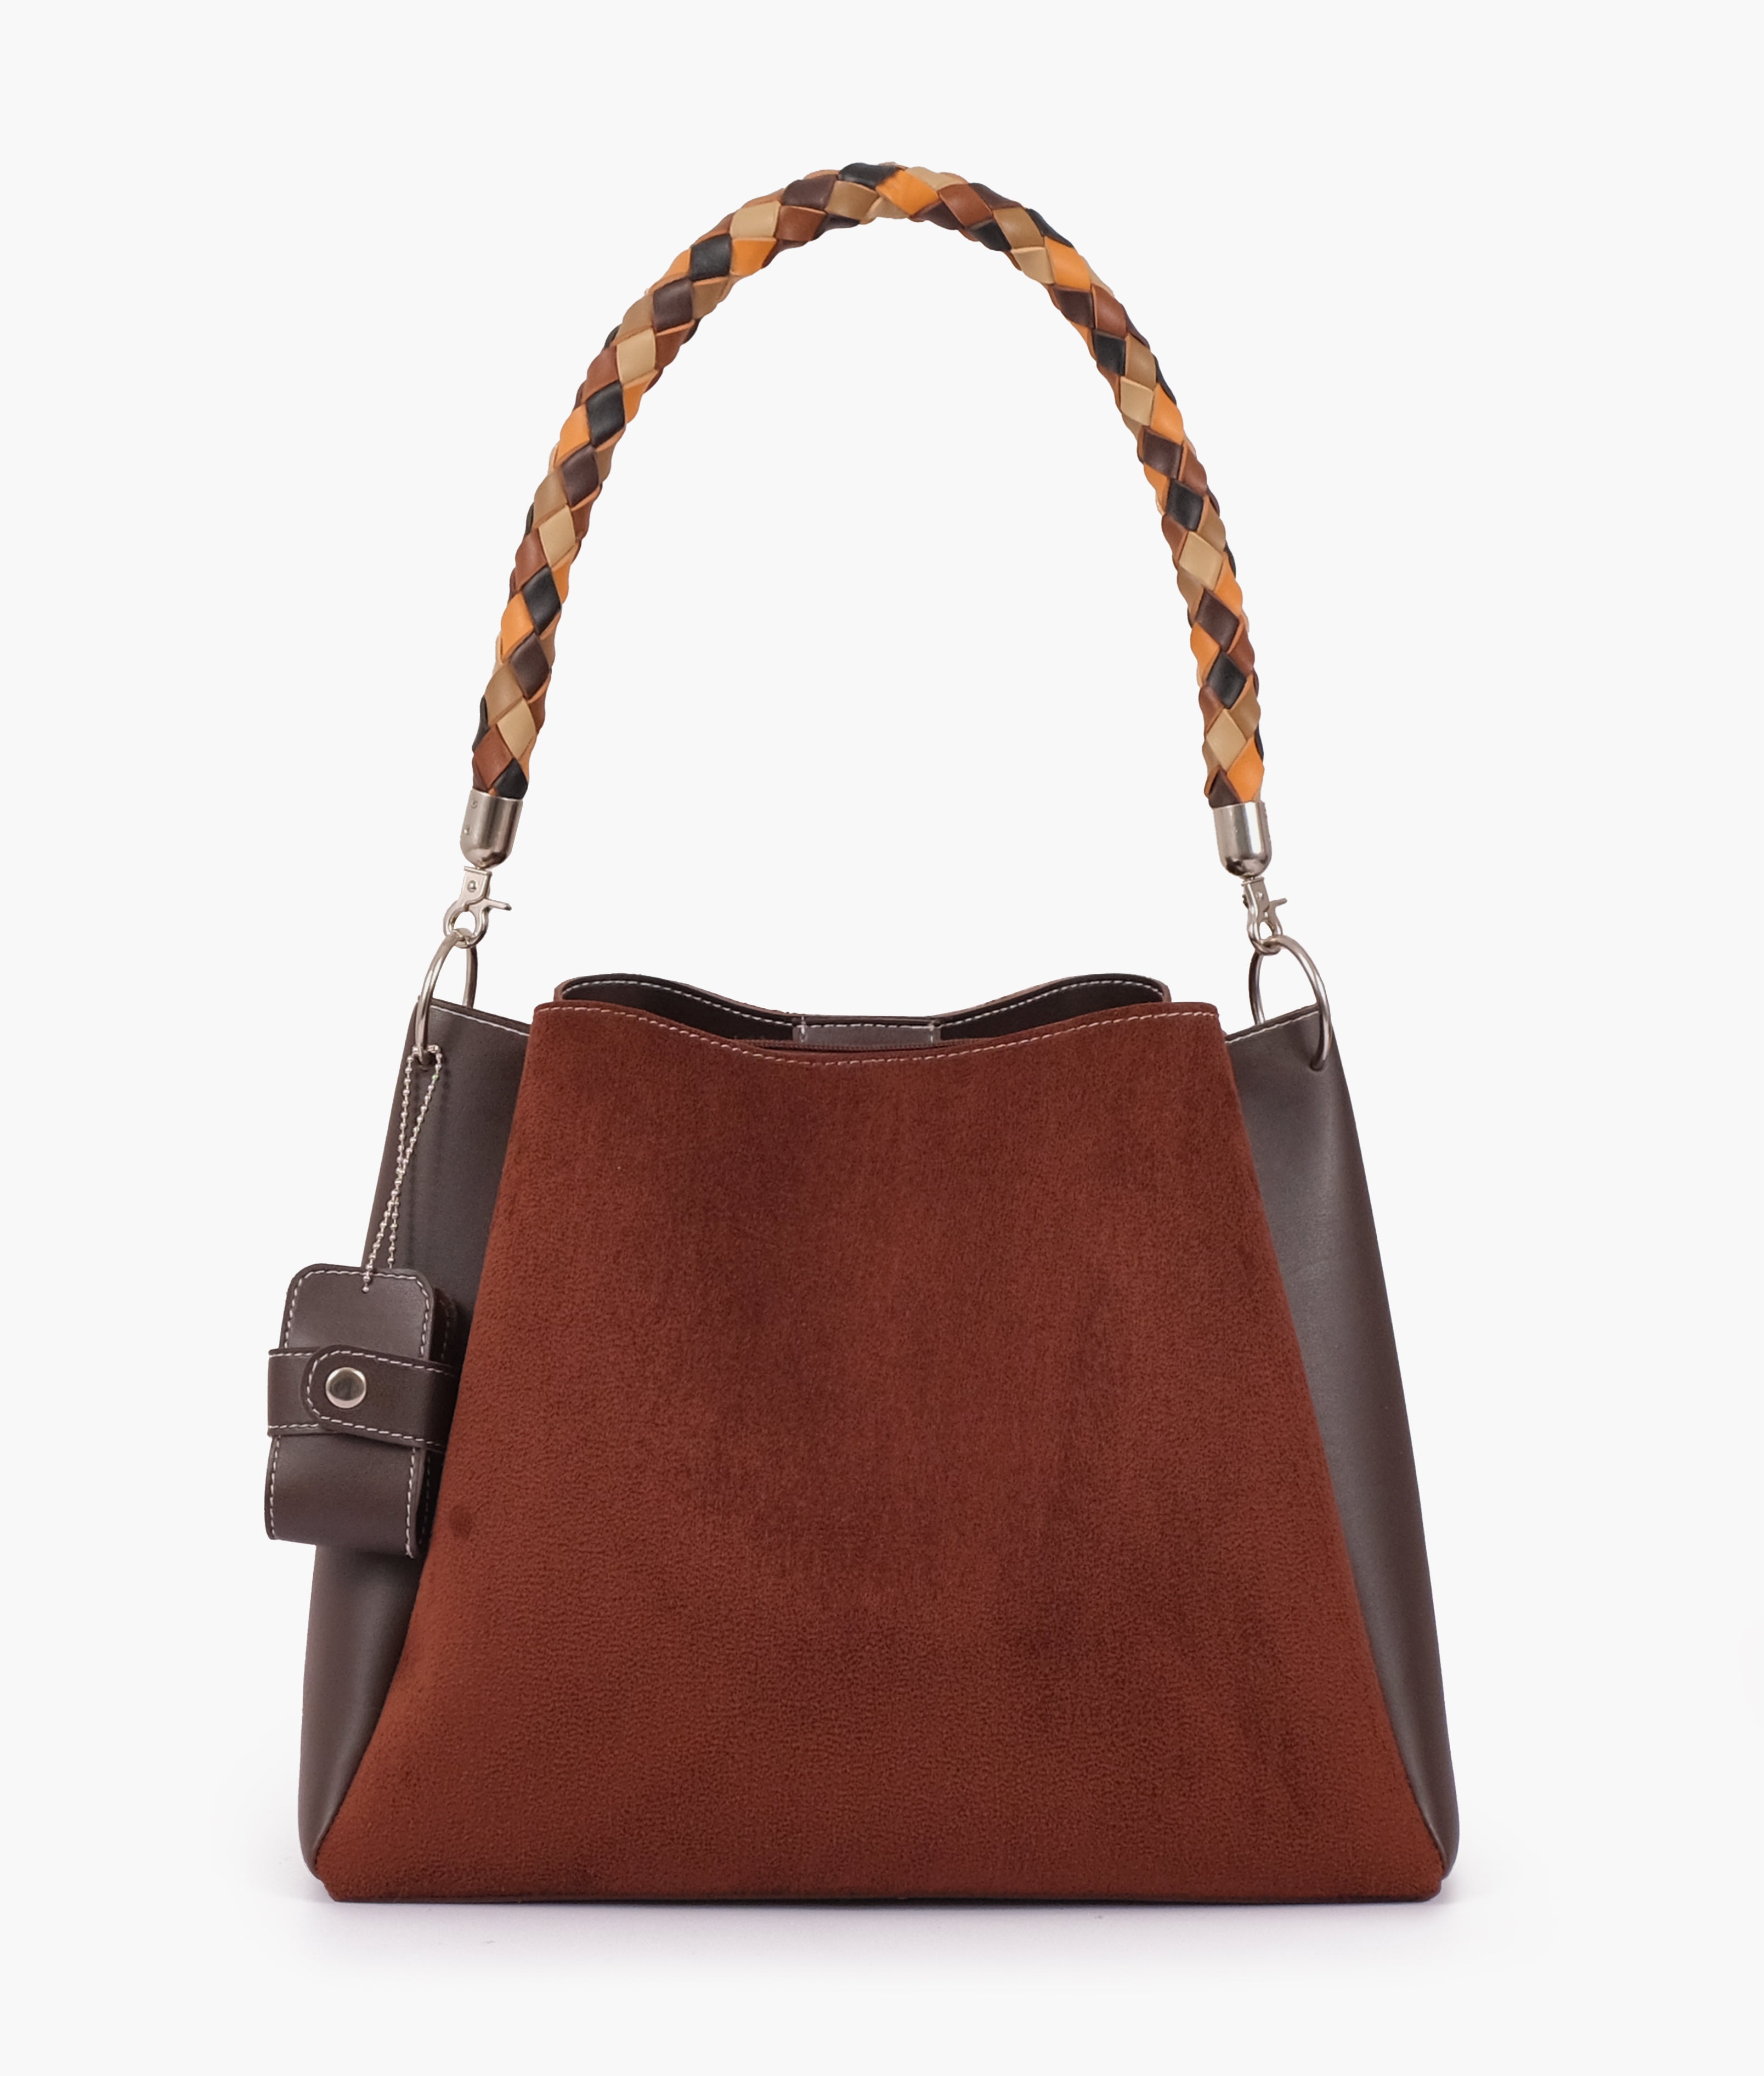 Dark brown suede handbag with braided handle